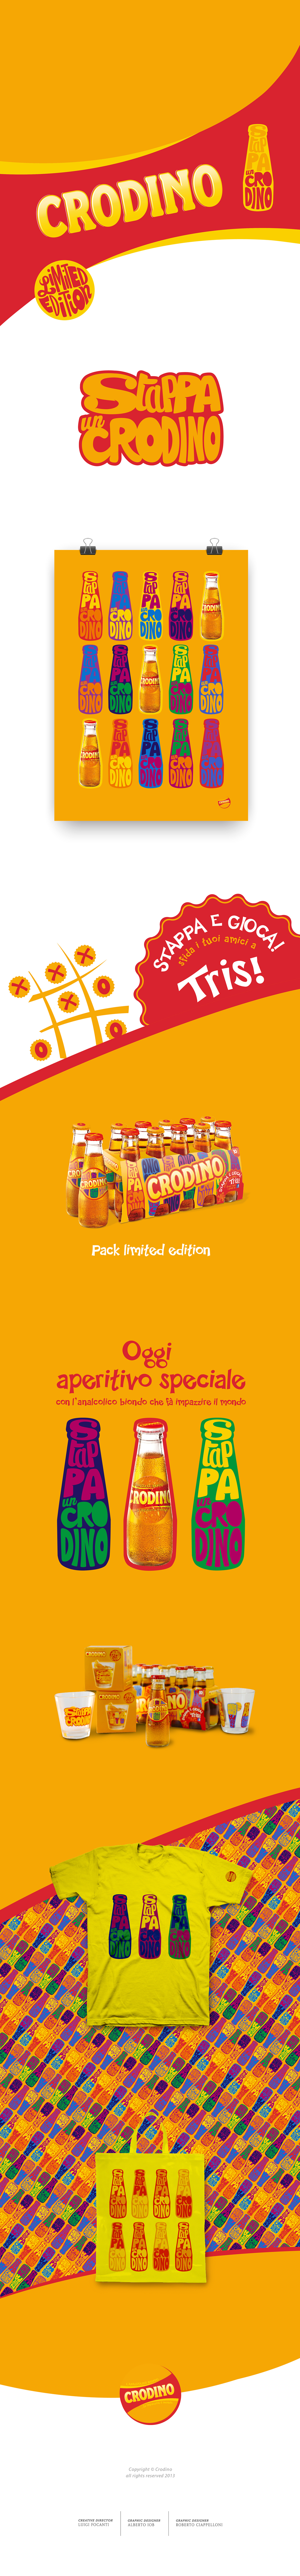 Crodino crodinotwist stappa colours HappyHour Italy analcoholic drink beverage new poster Pop Art 60's